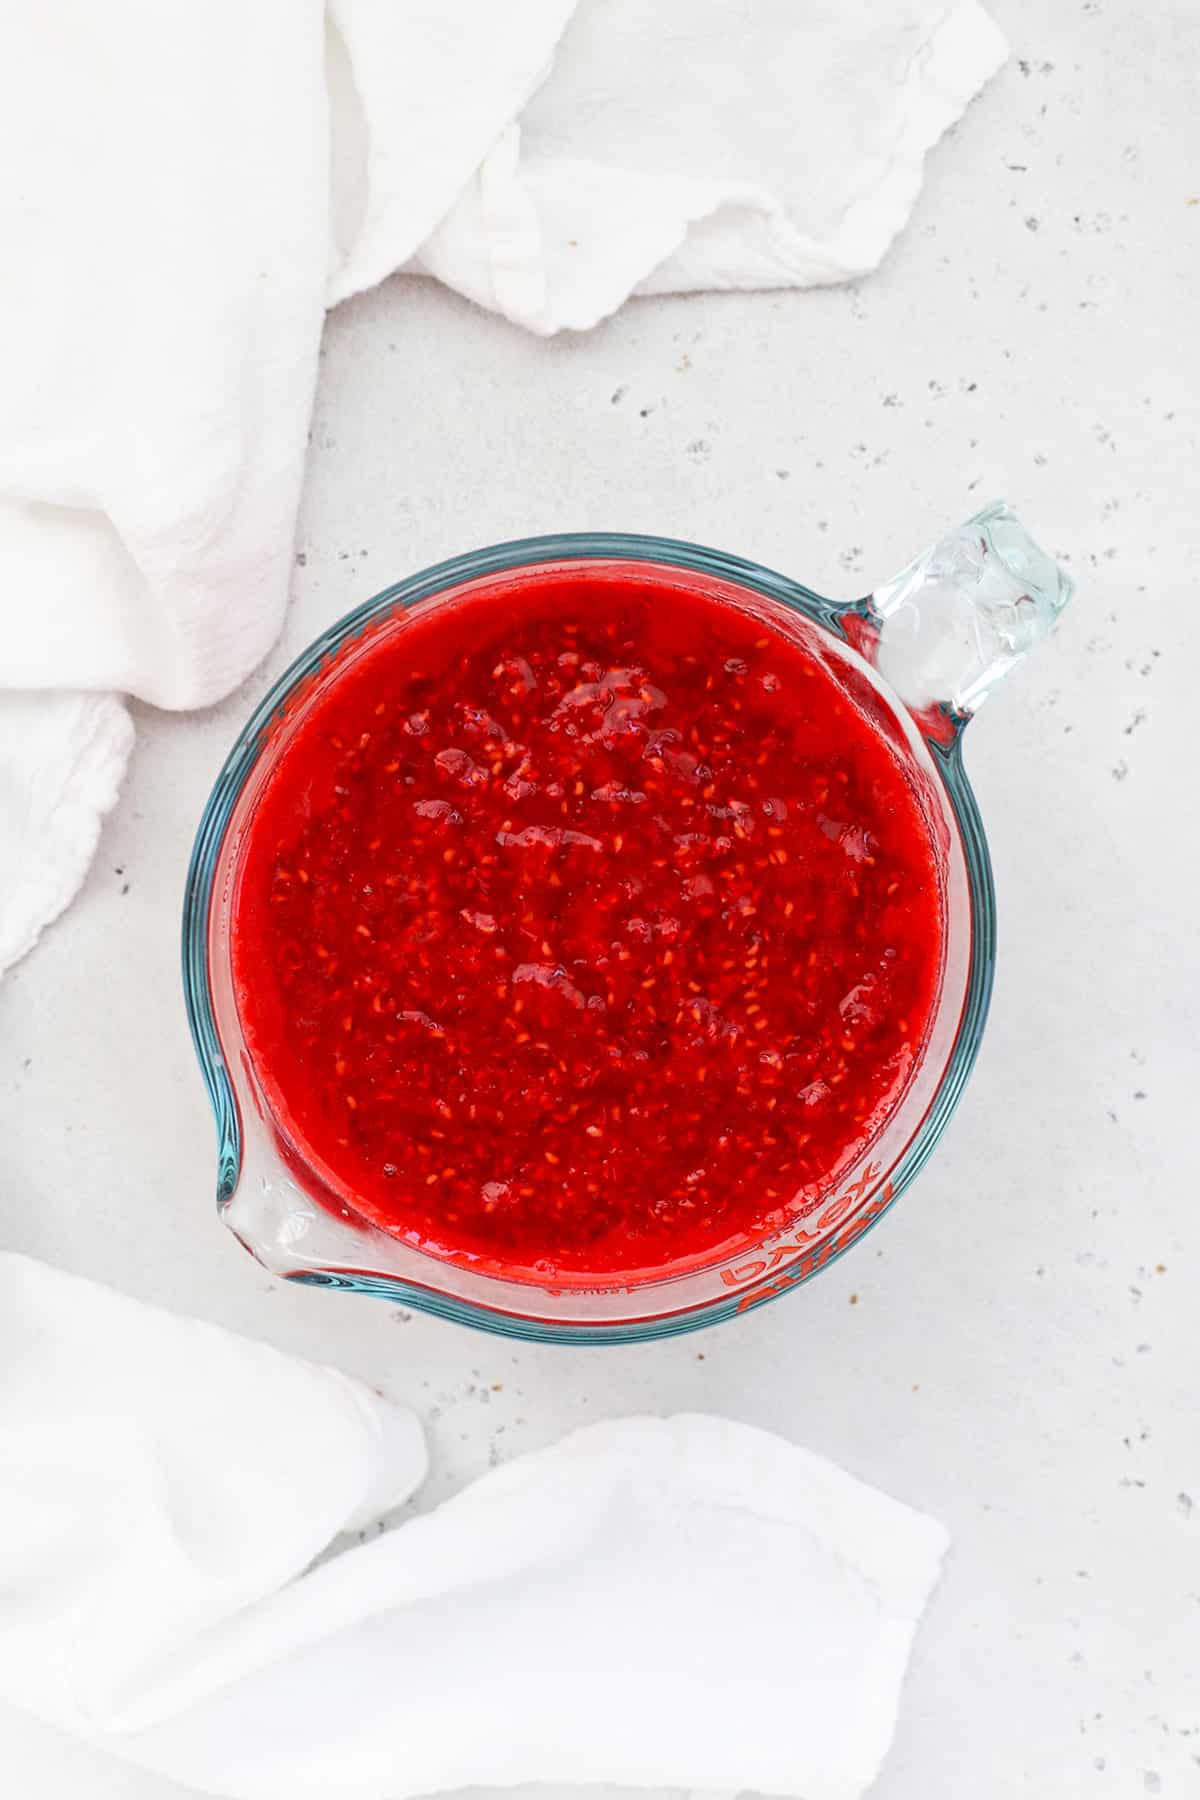 Mashed raspberries for homemade freezer jam